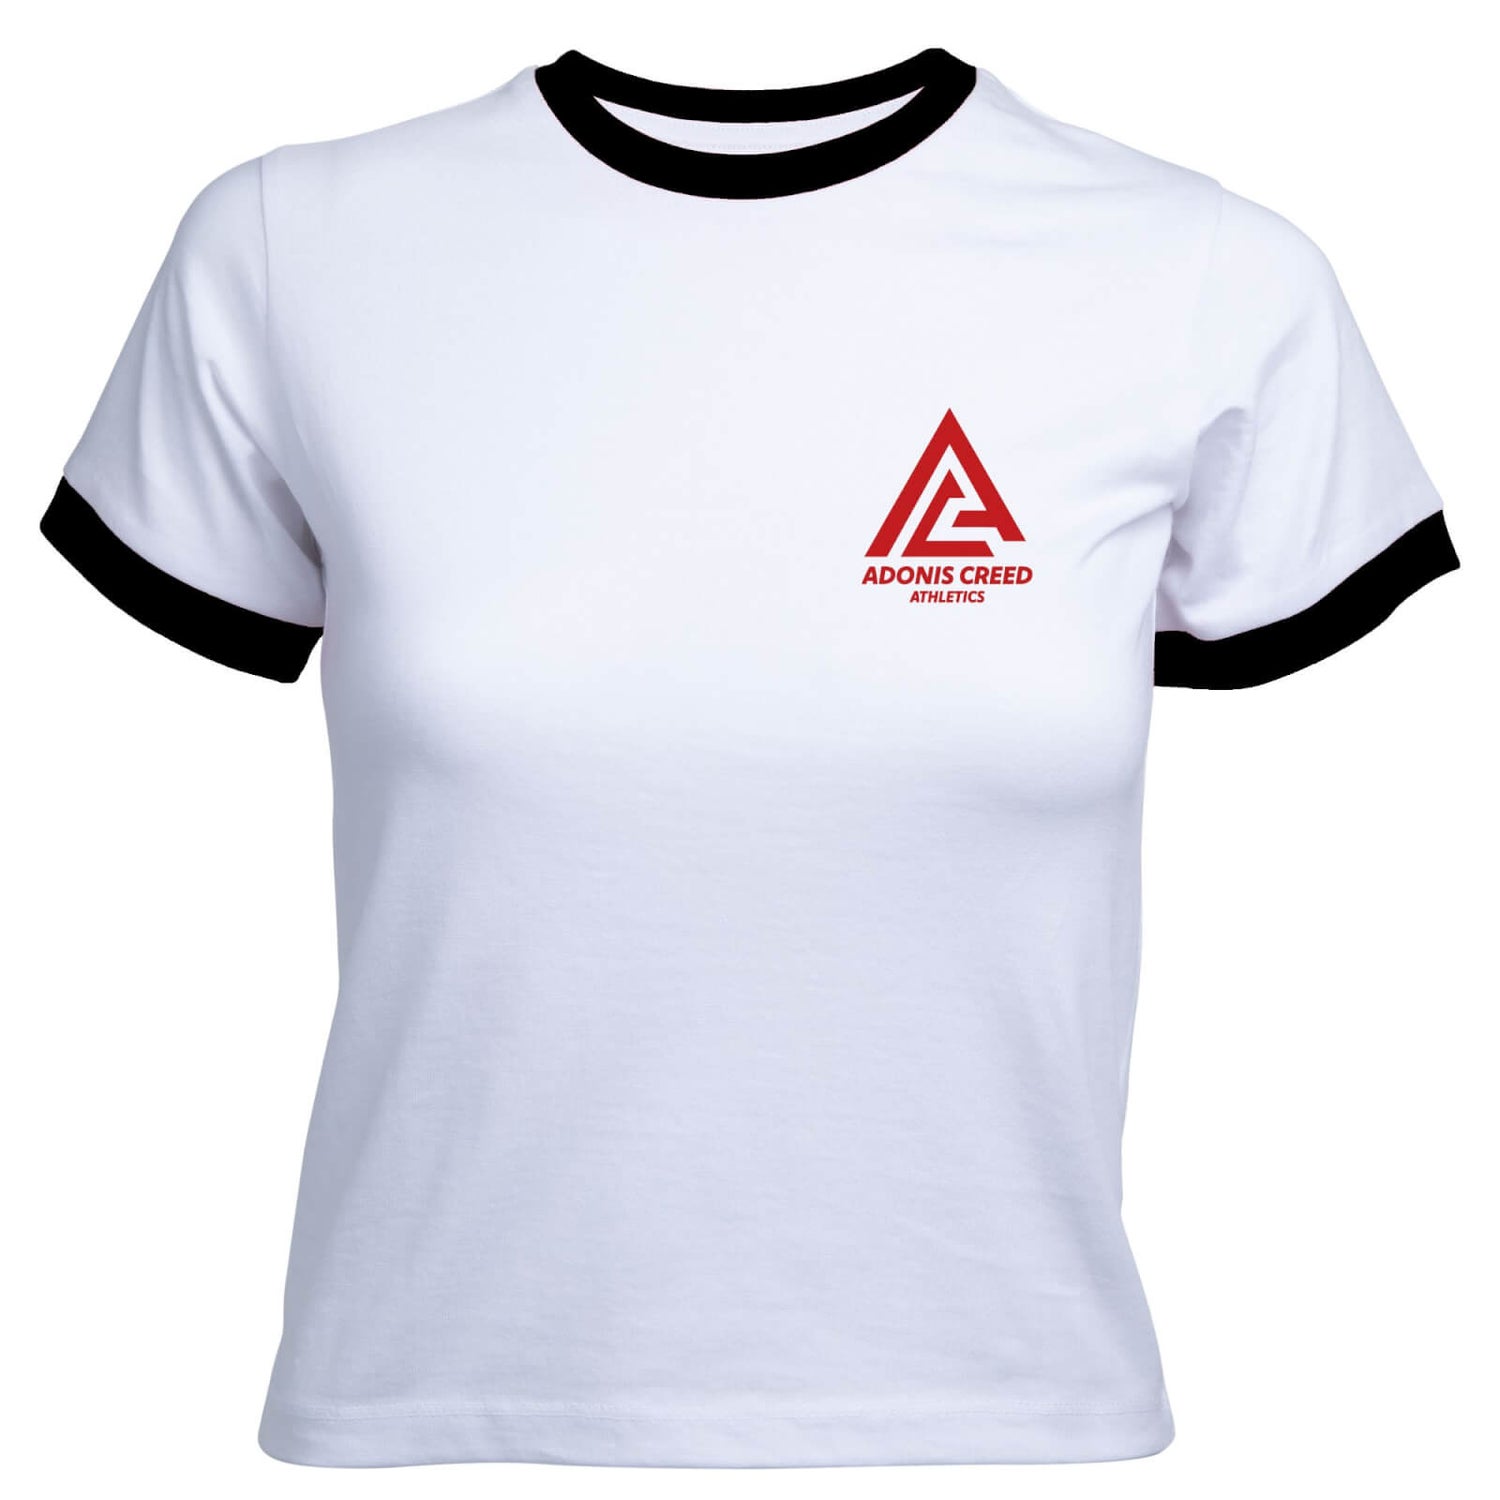 Creed Adonis Creed Athletics Logo Women's Cropped Ringer T-Shirt - White Black - XS